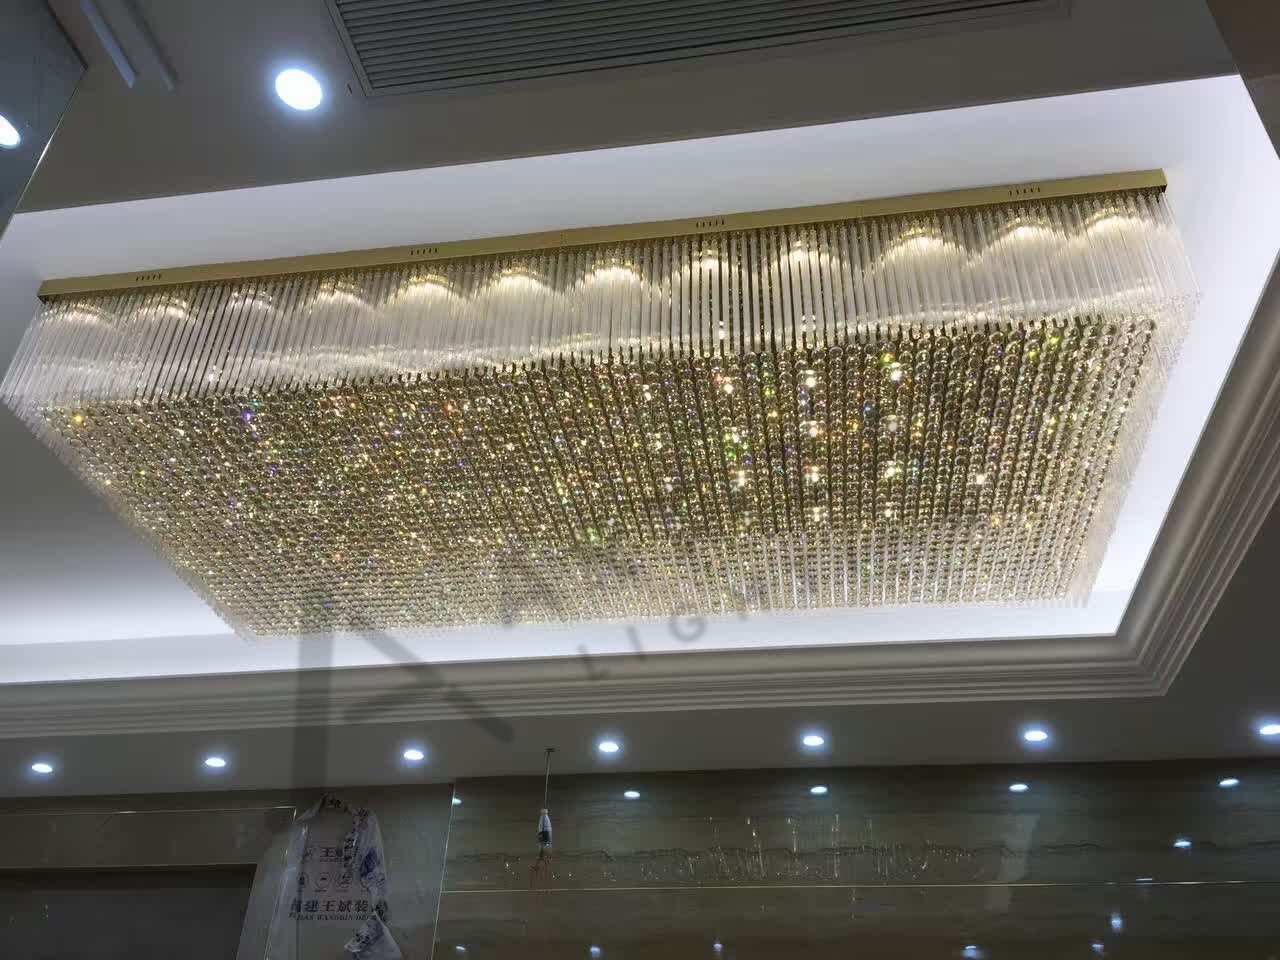 Hotel crystal chandeliers classic design For ballroom indoor decorative